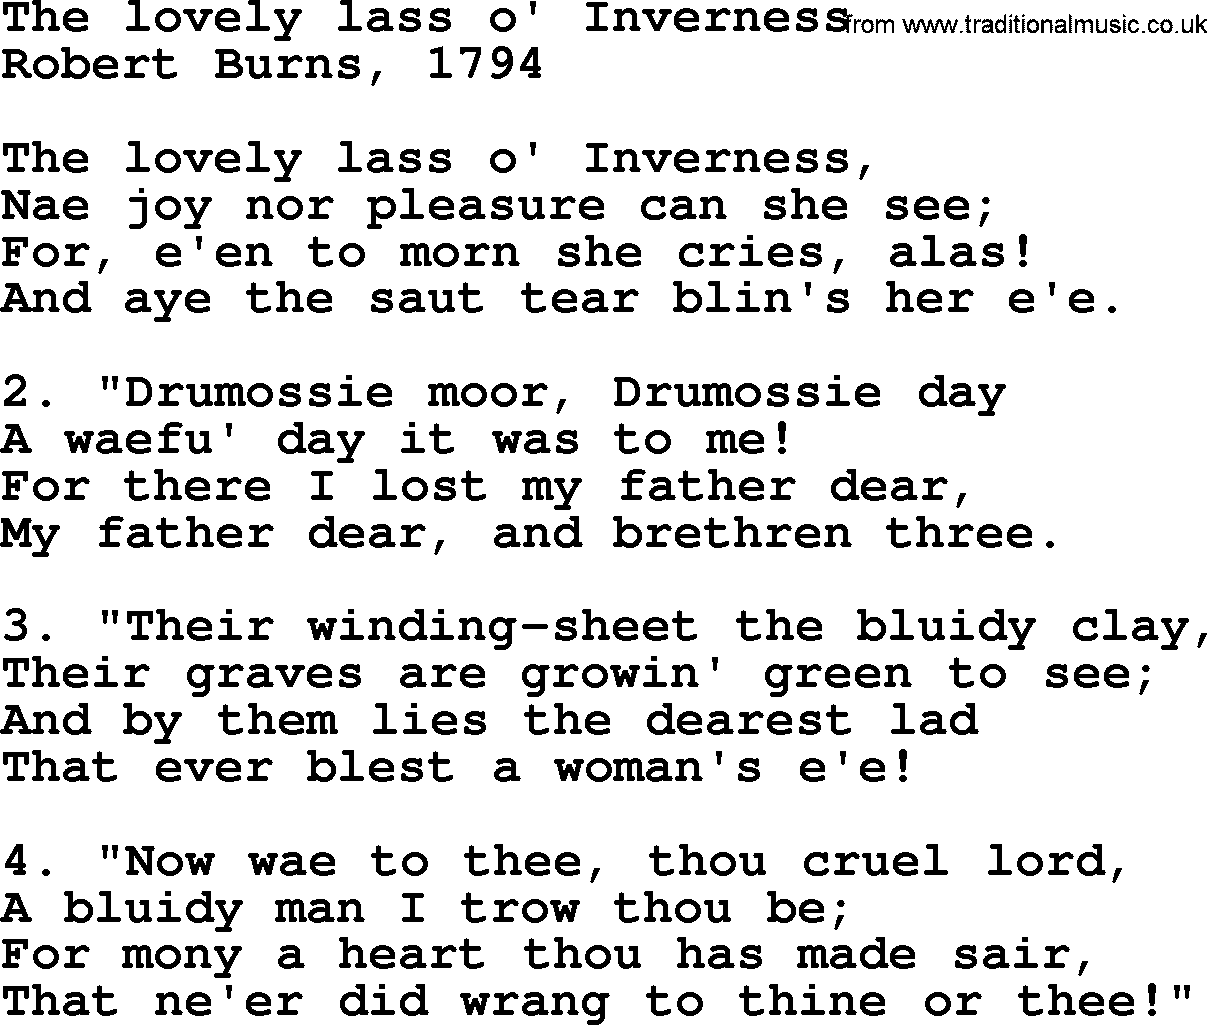 Robert Burns Songs & Lyrics: The Lovely Lass O' Inverness